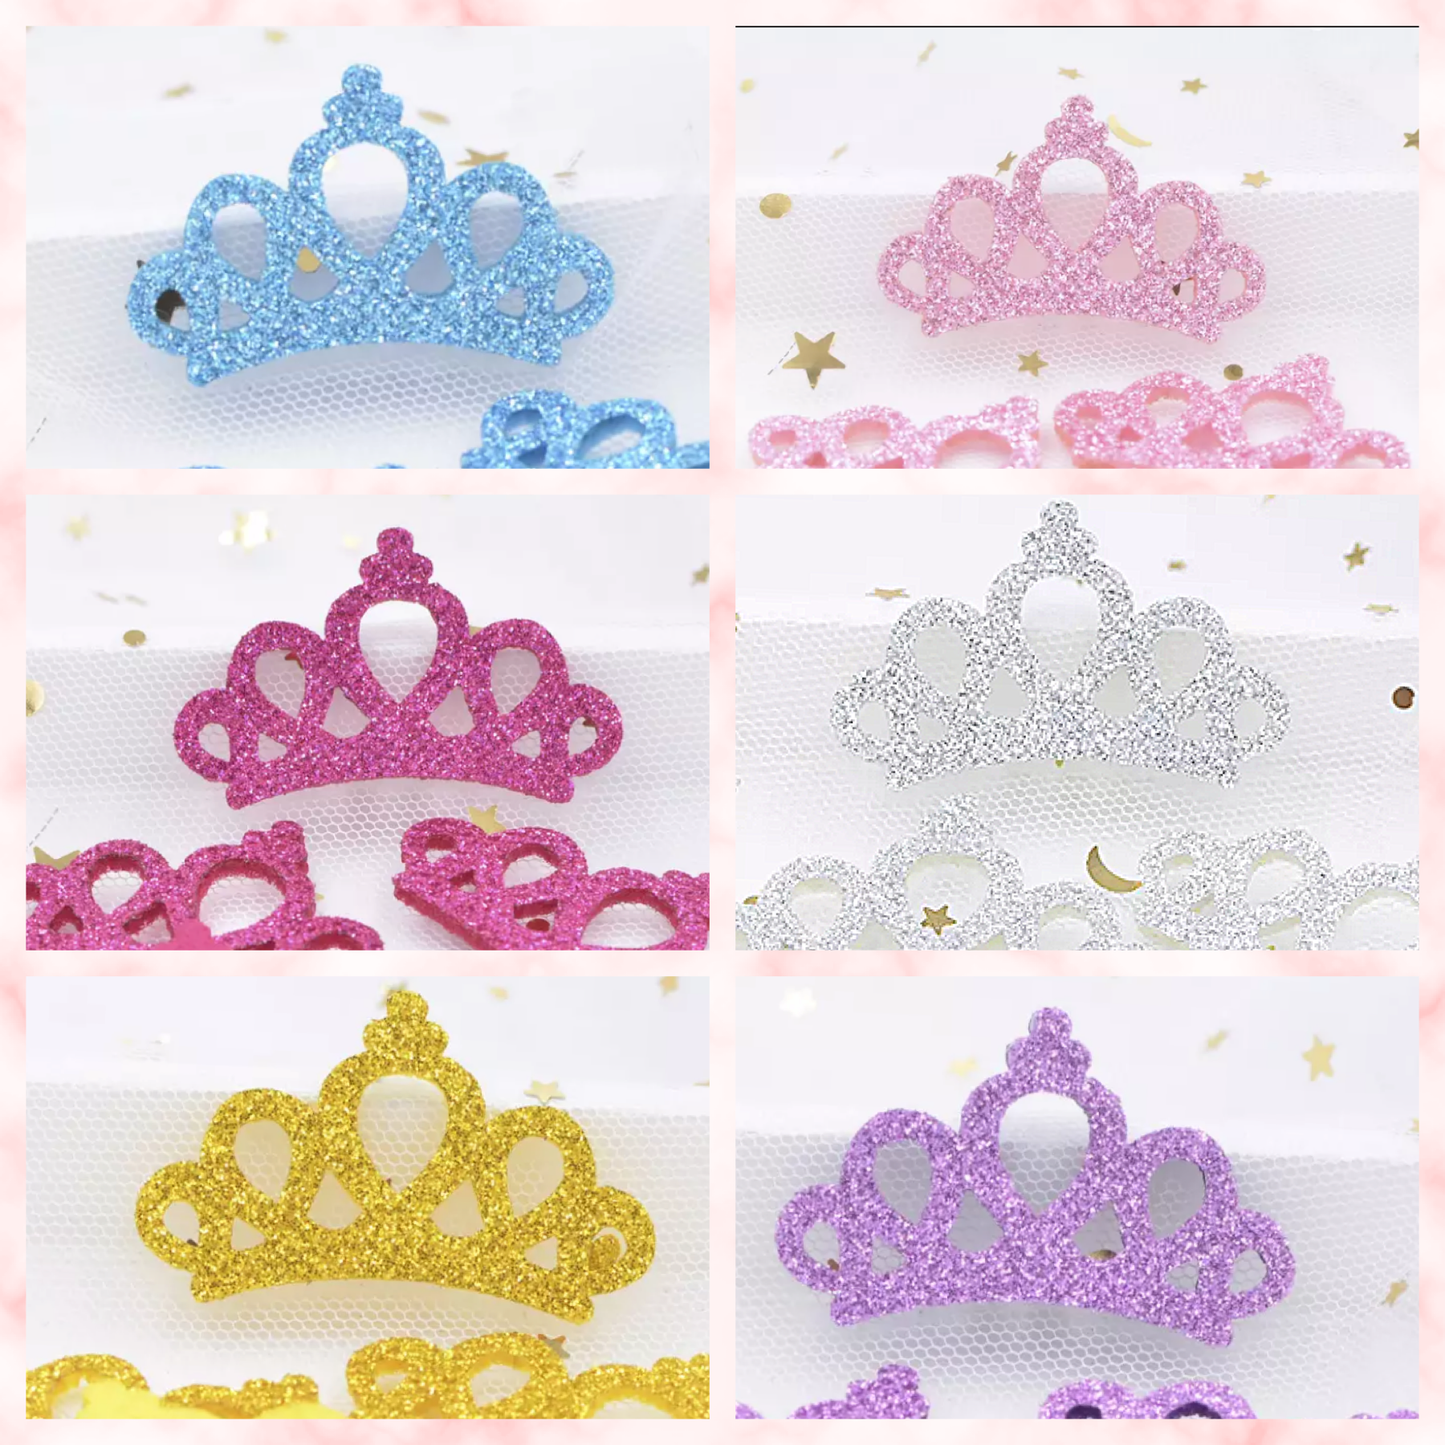 46 x 29 mm felt backed glitter tiara  / crown embellishments